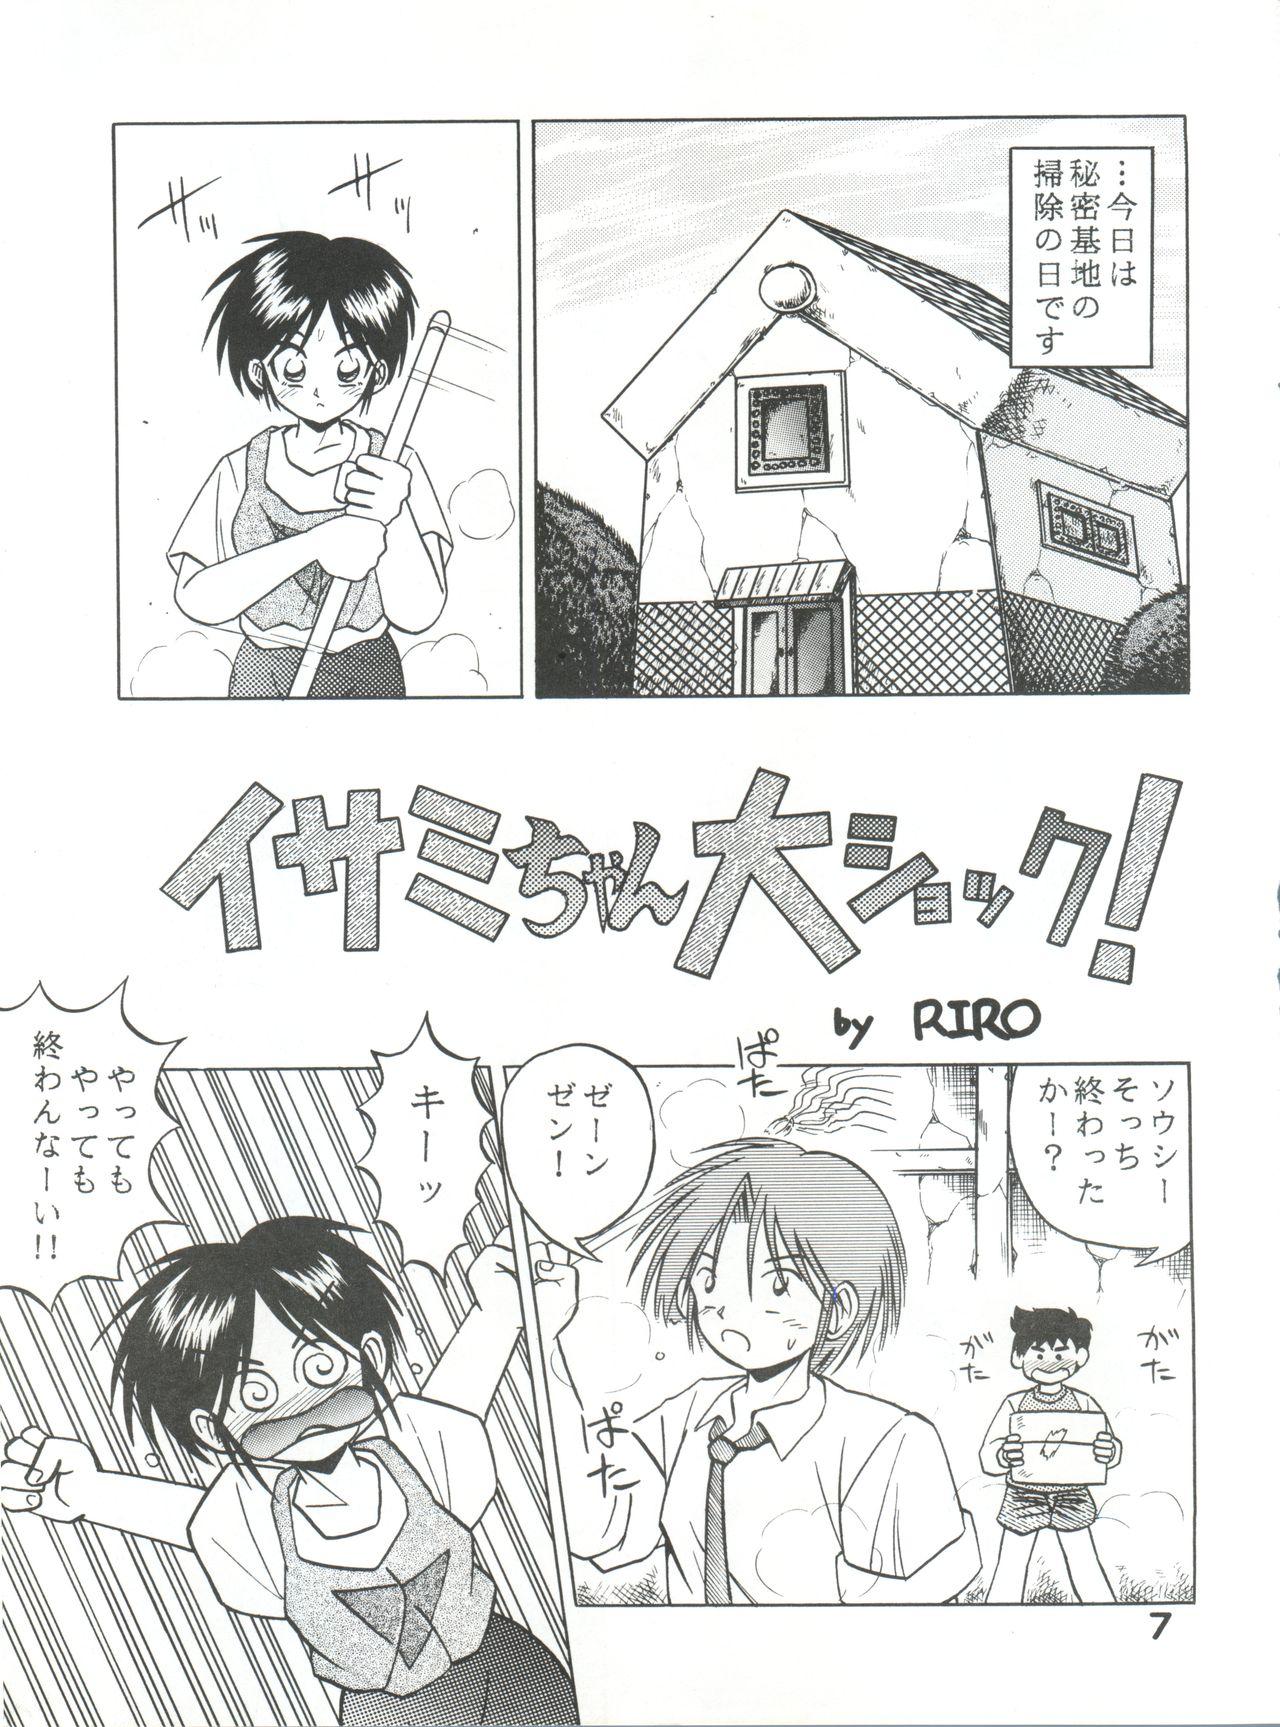 Cream Gonen Sankumi Shinsengumi! - Tobe isami Time - Page 6